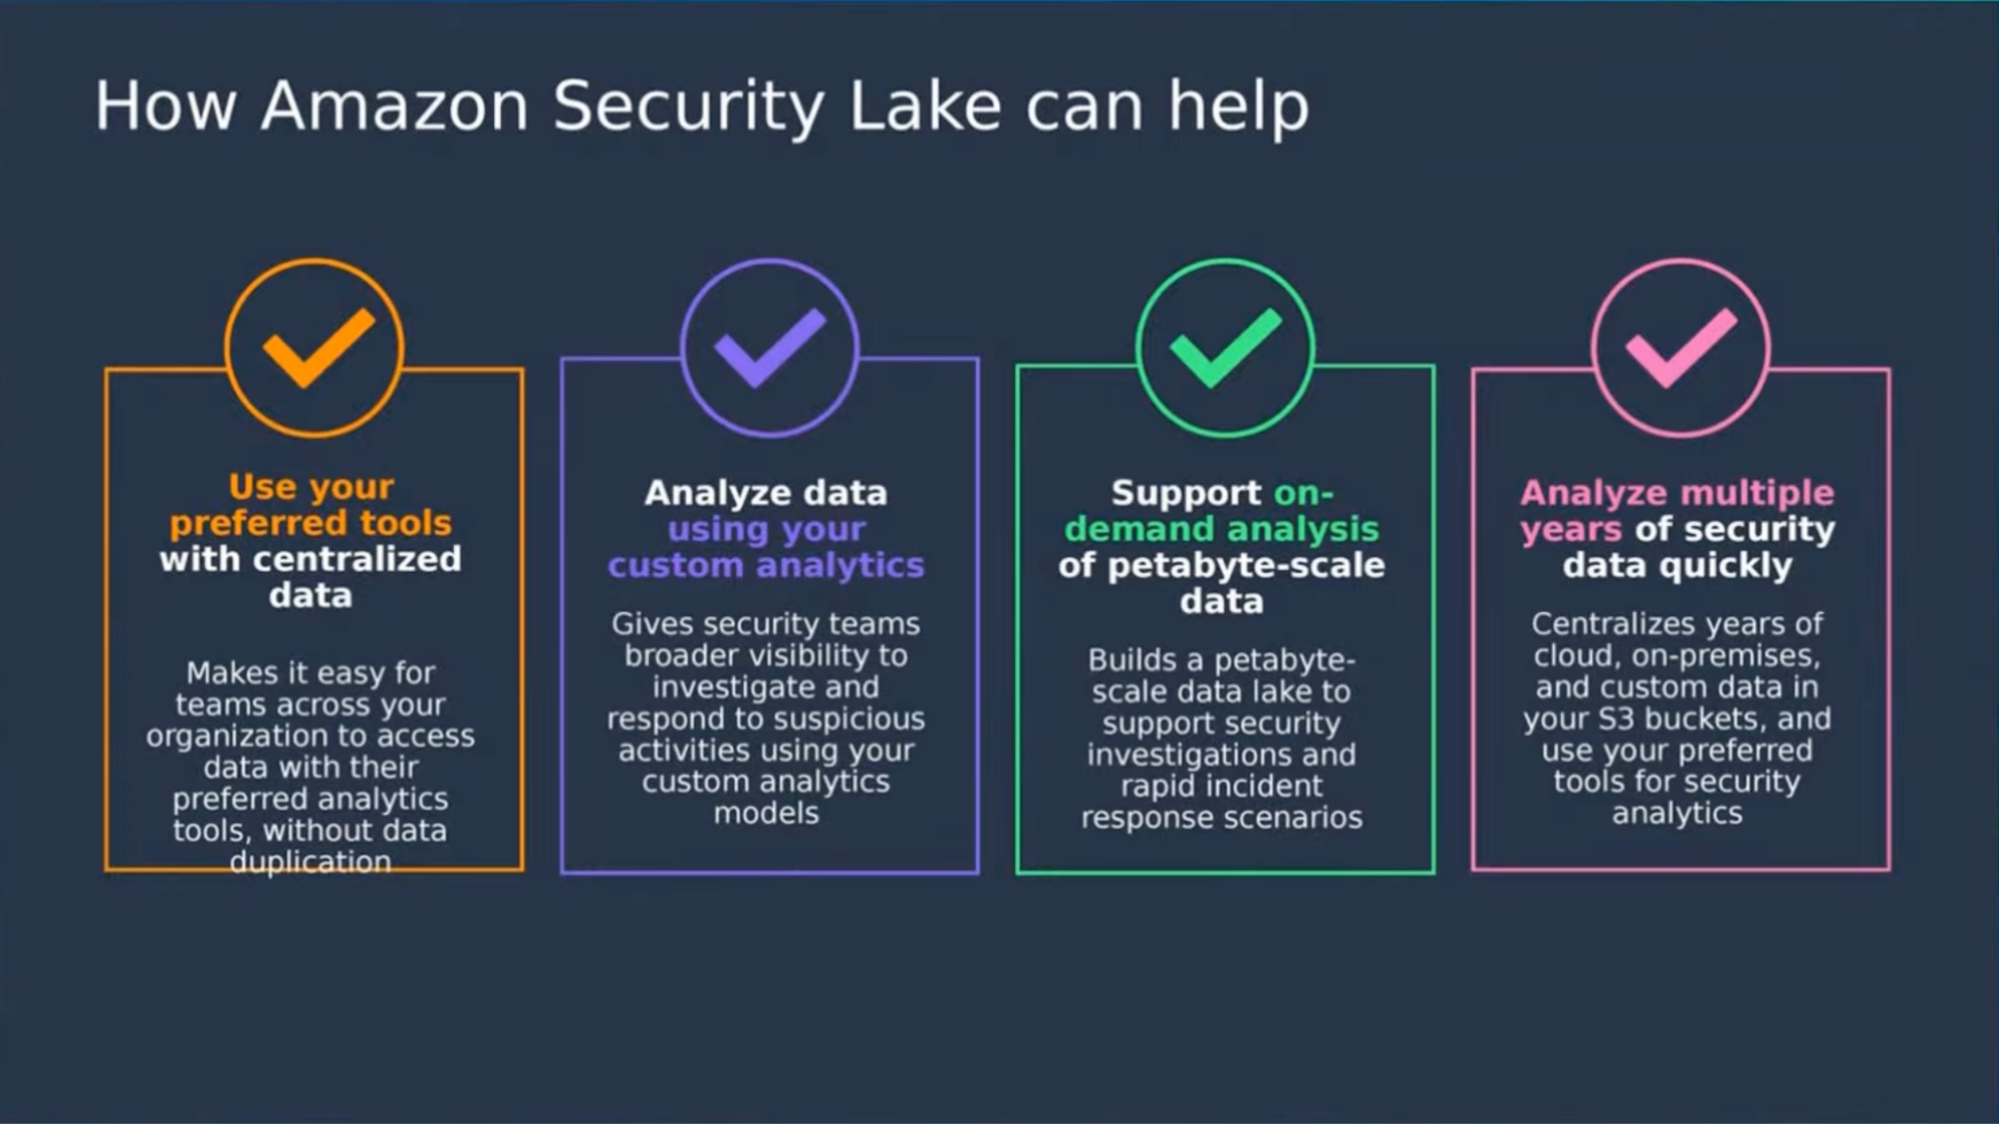 Amazon security lake